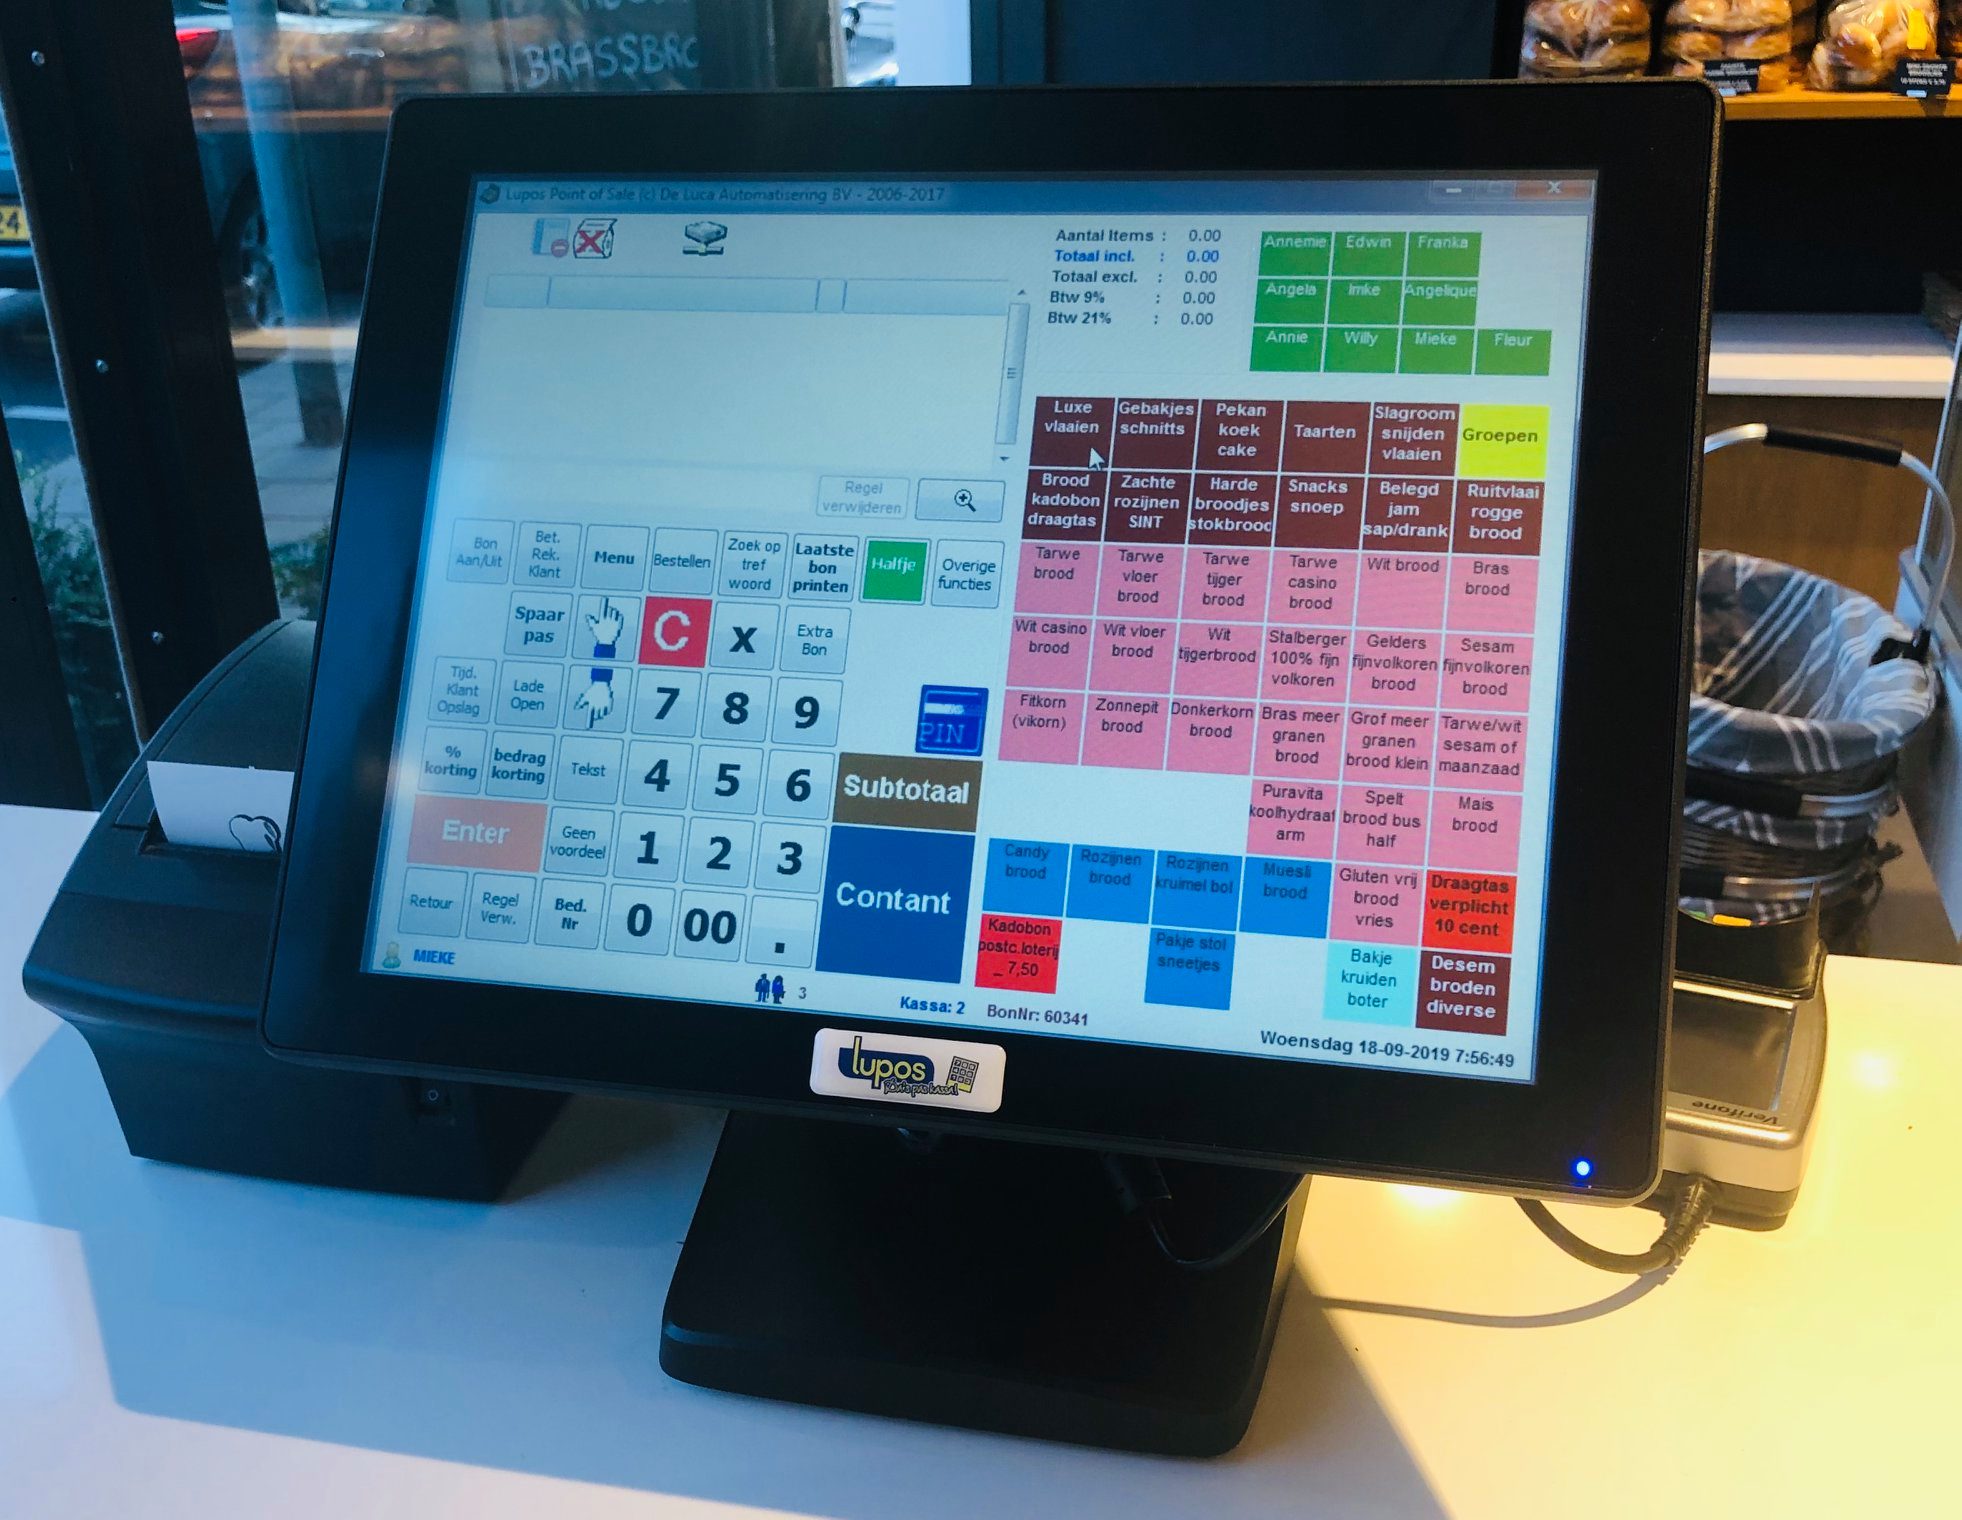 Supermarkt Winkelautomatisering